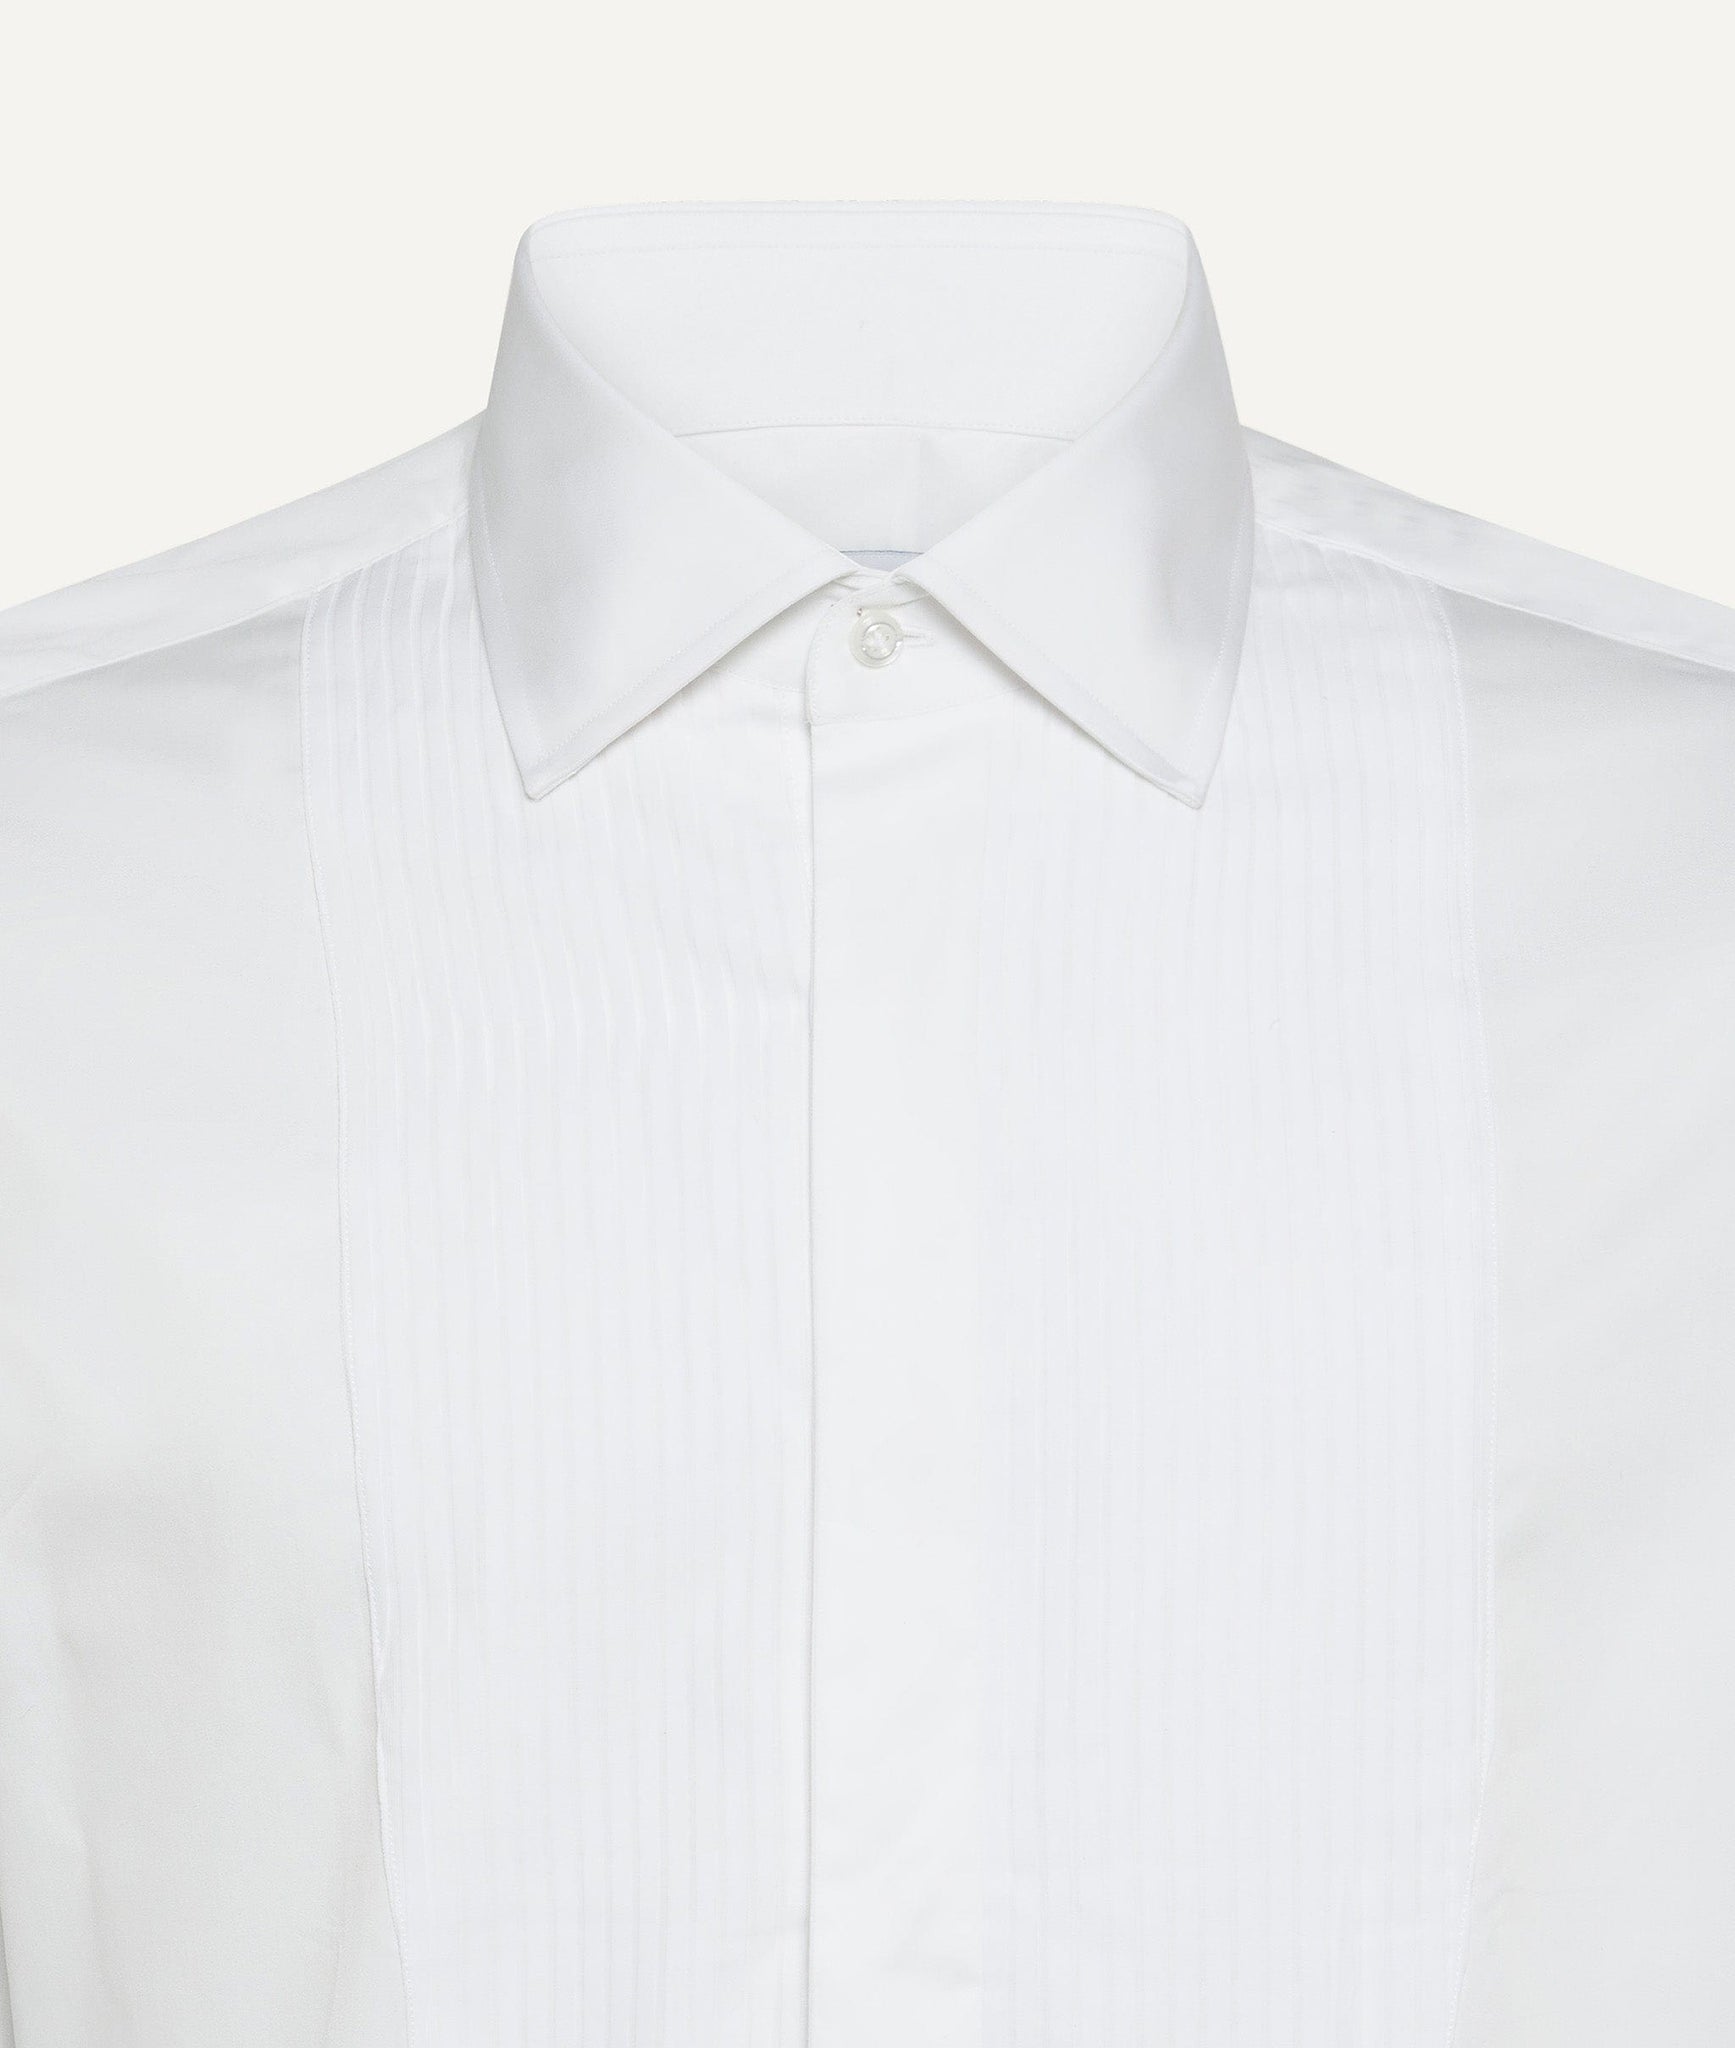 Piqué Bib Tuxedo Shirt with Cufflinks in Cotton